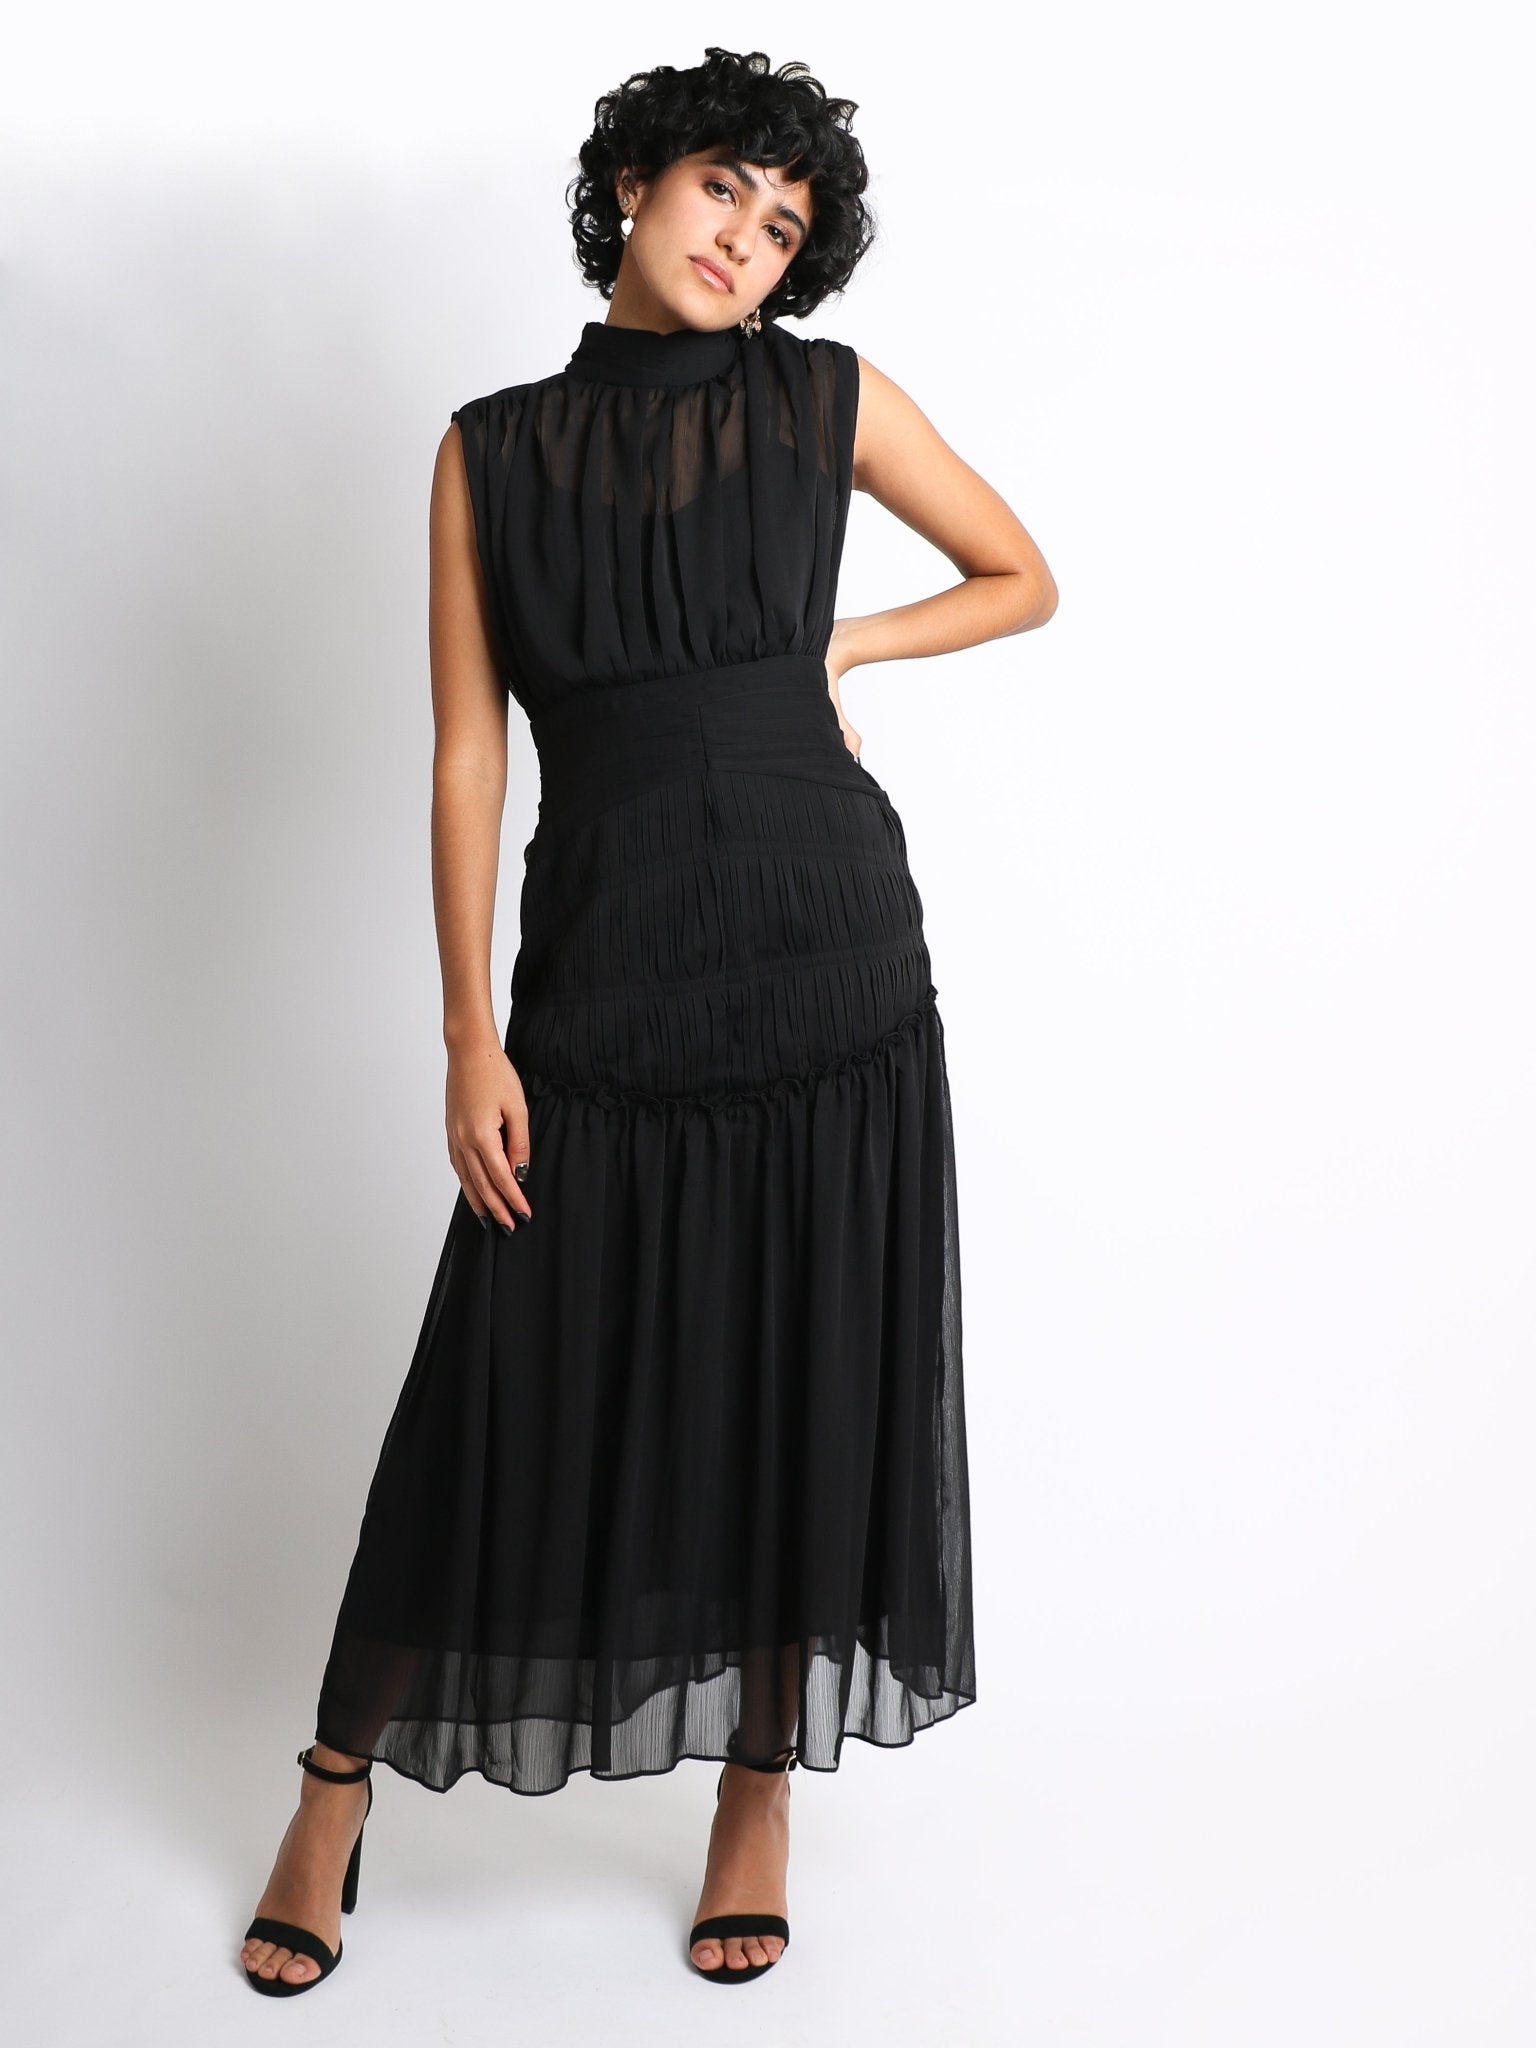 Elvira - negro venta - Lend the Trend renta de vestidos mexico